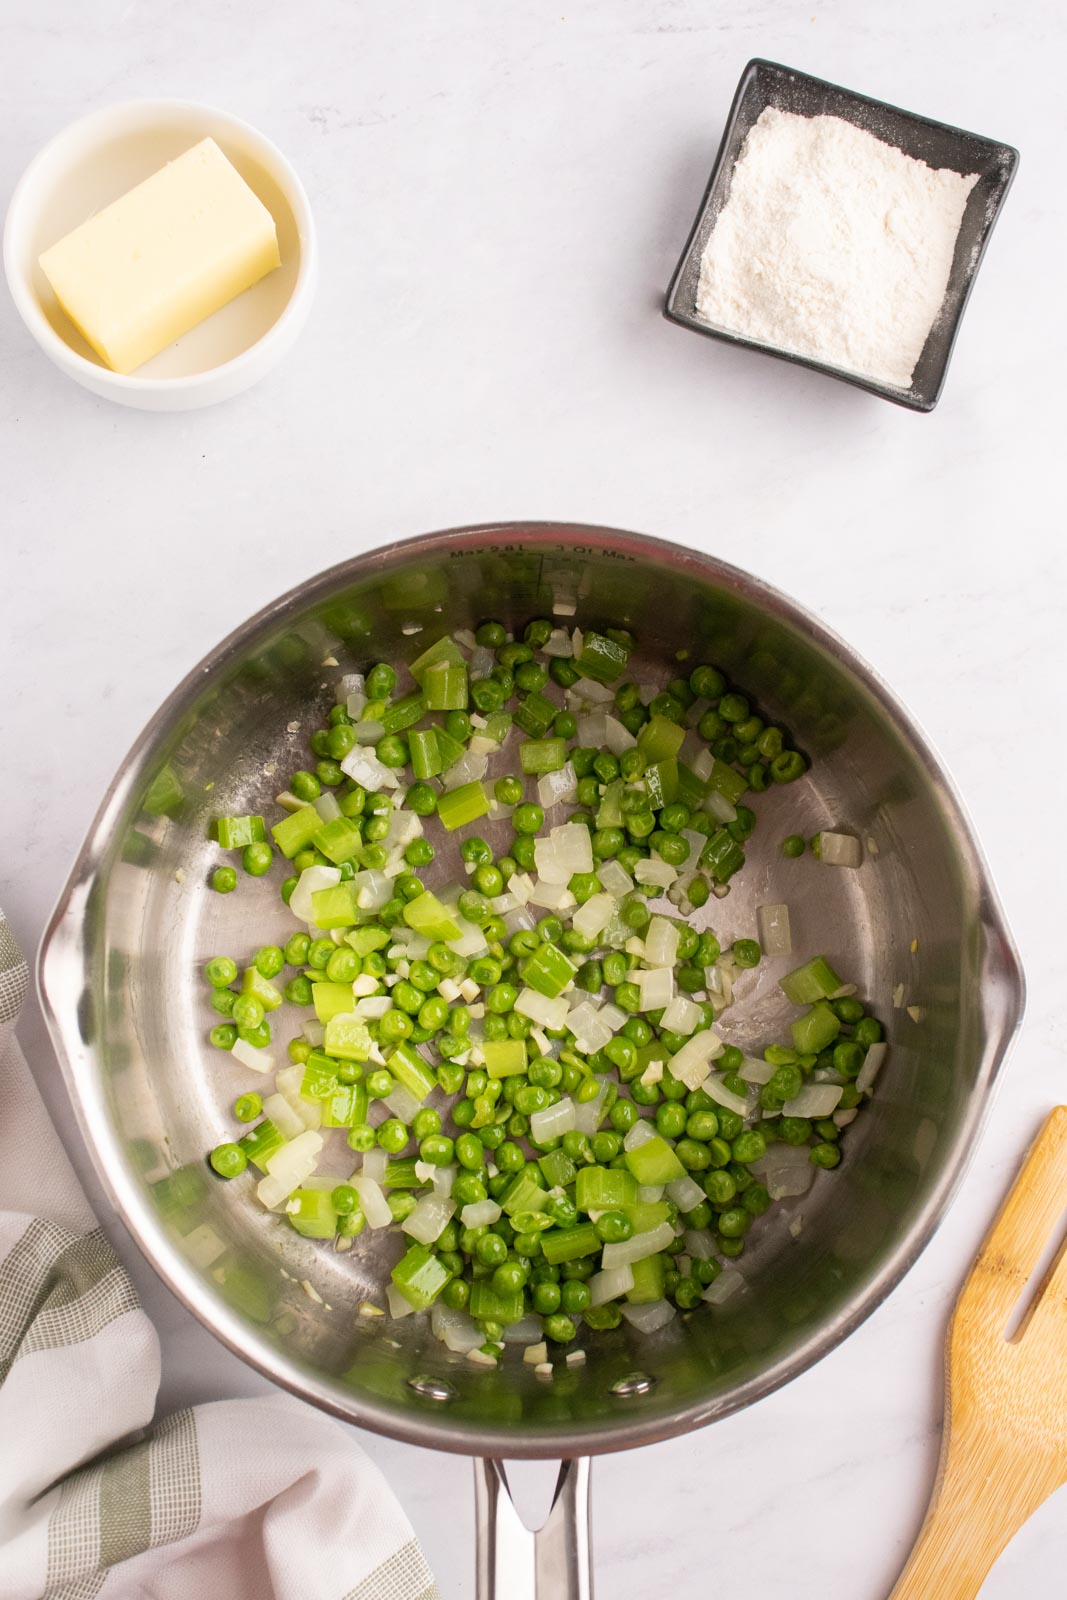 Sauteed onion, celery, garlic, and peas.